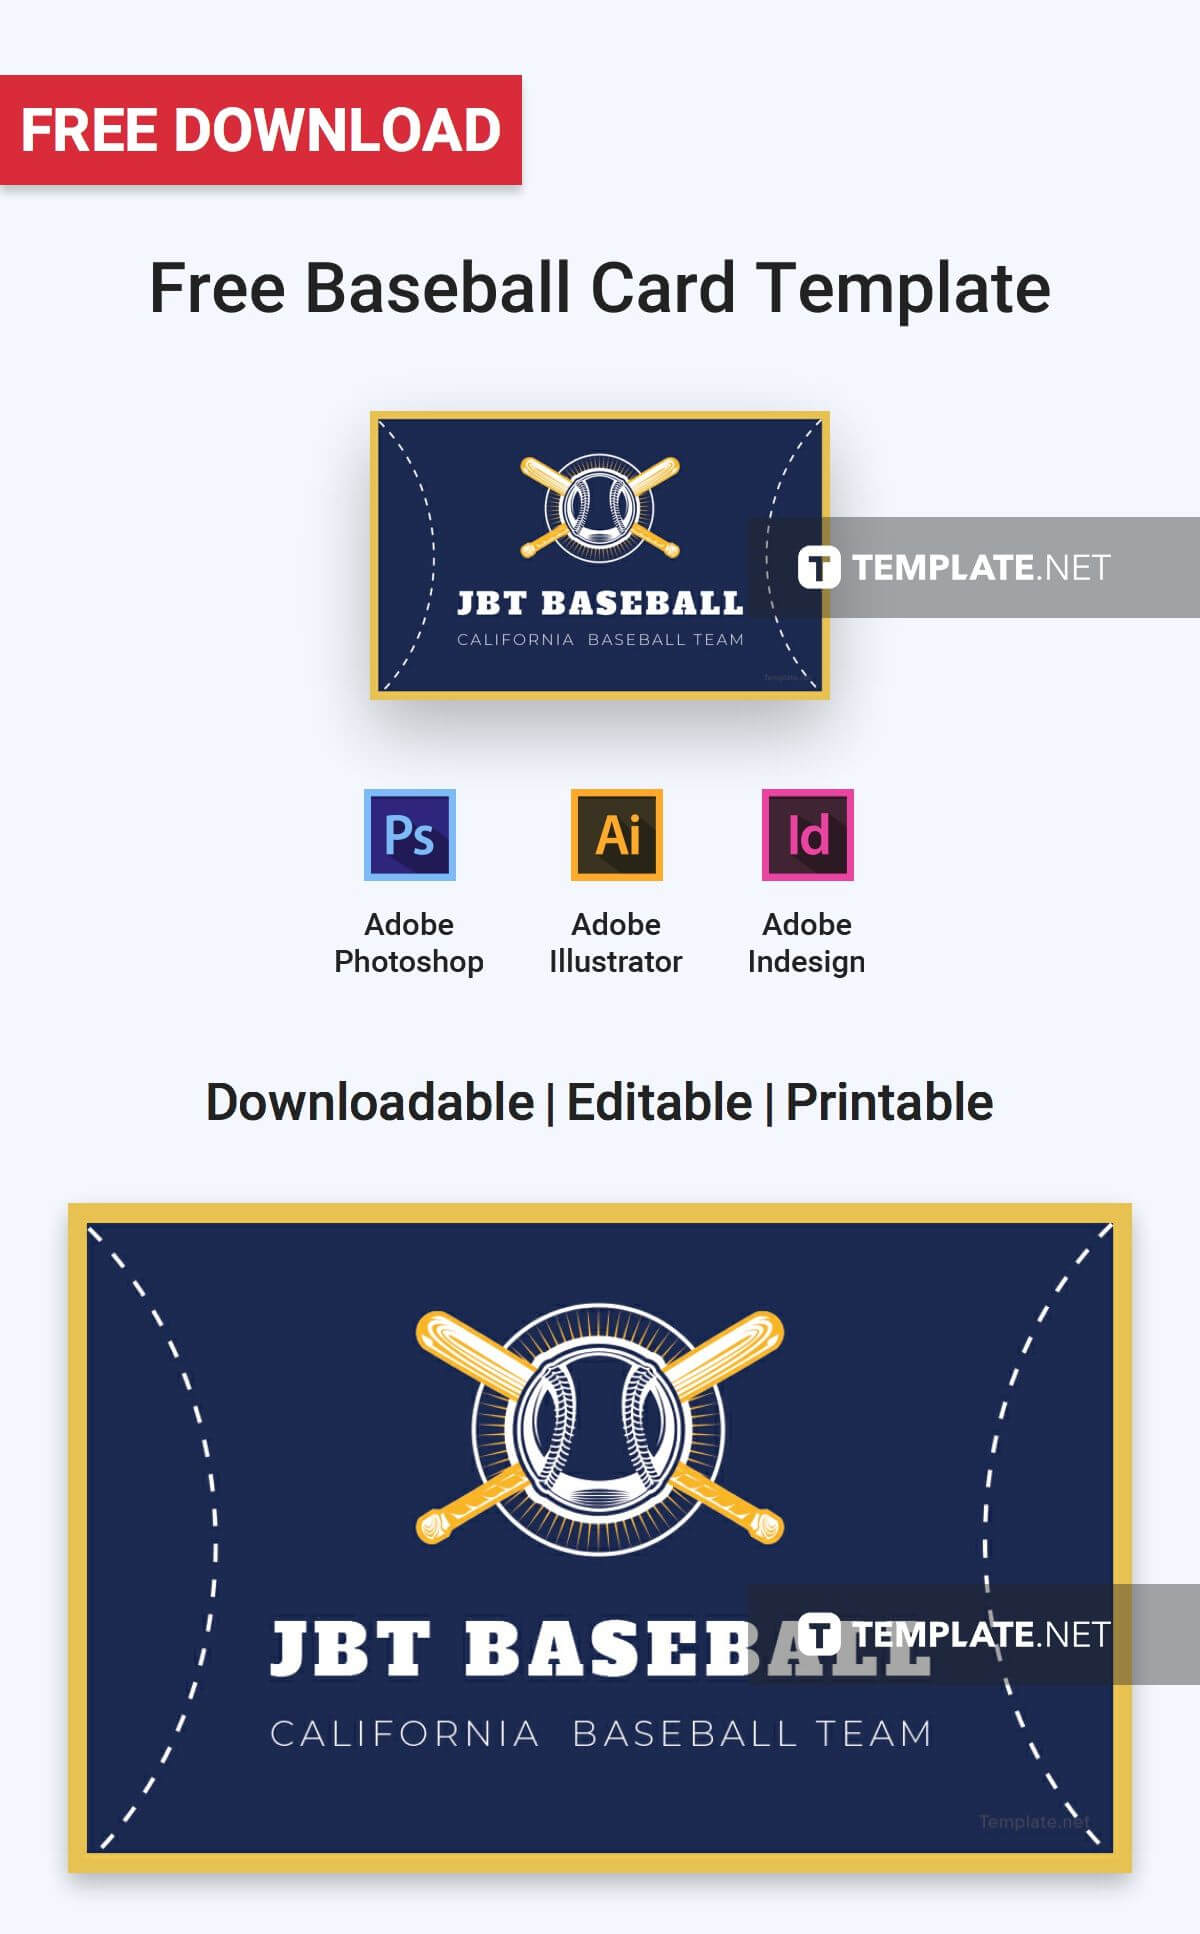 Free Baseball Card | Card Templates & Designs 2019 Throughout Baseball Card Template Microsoft Word